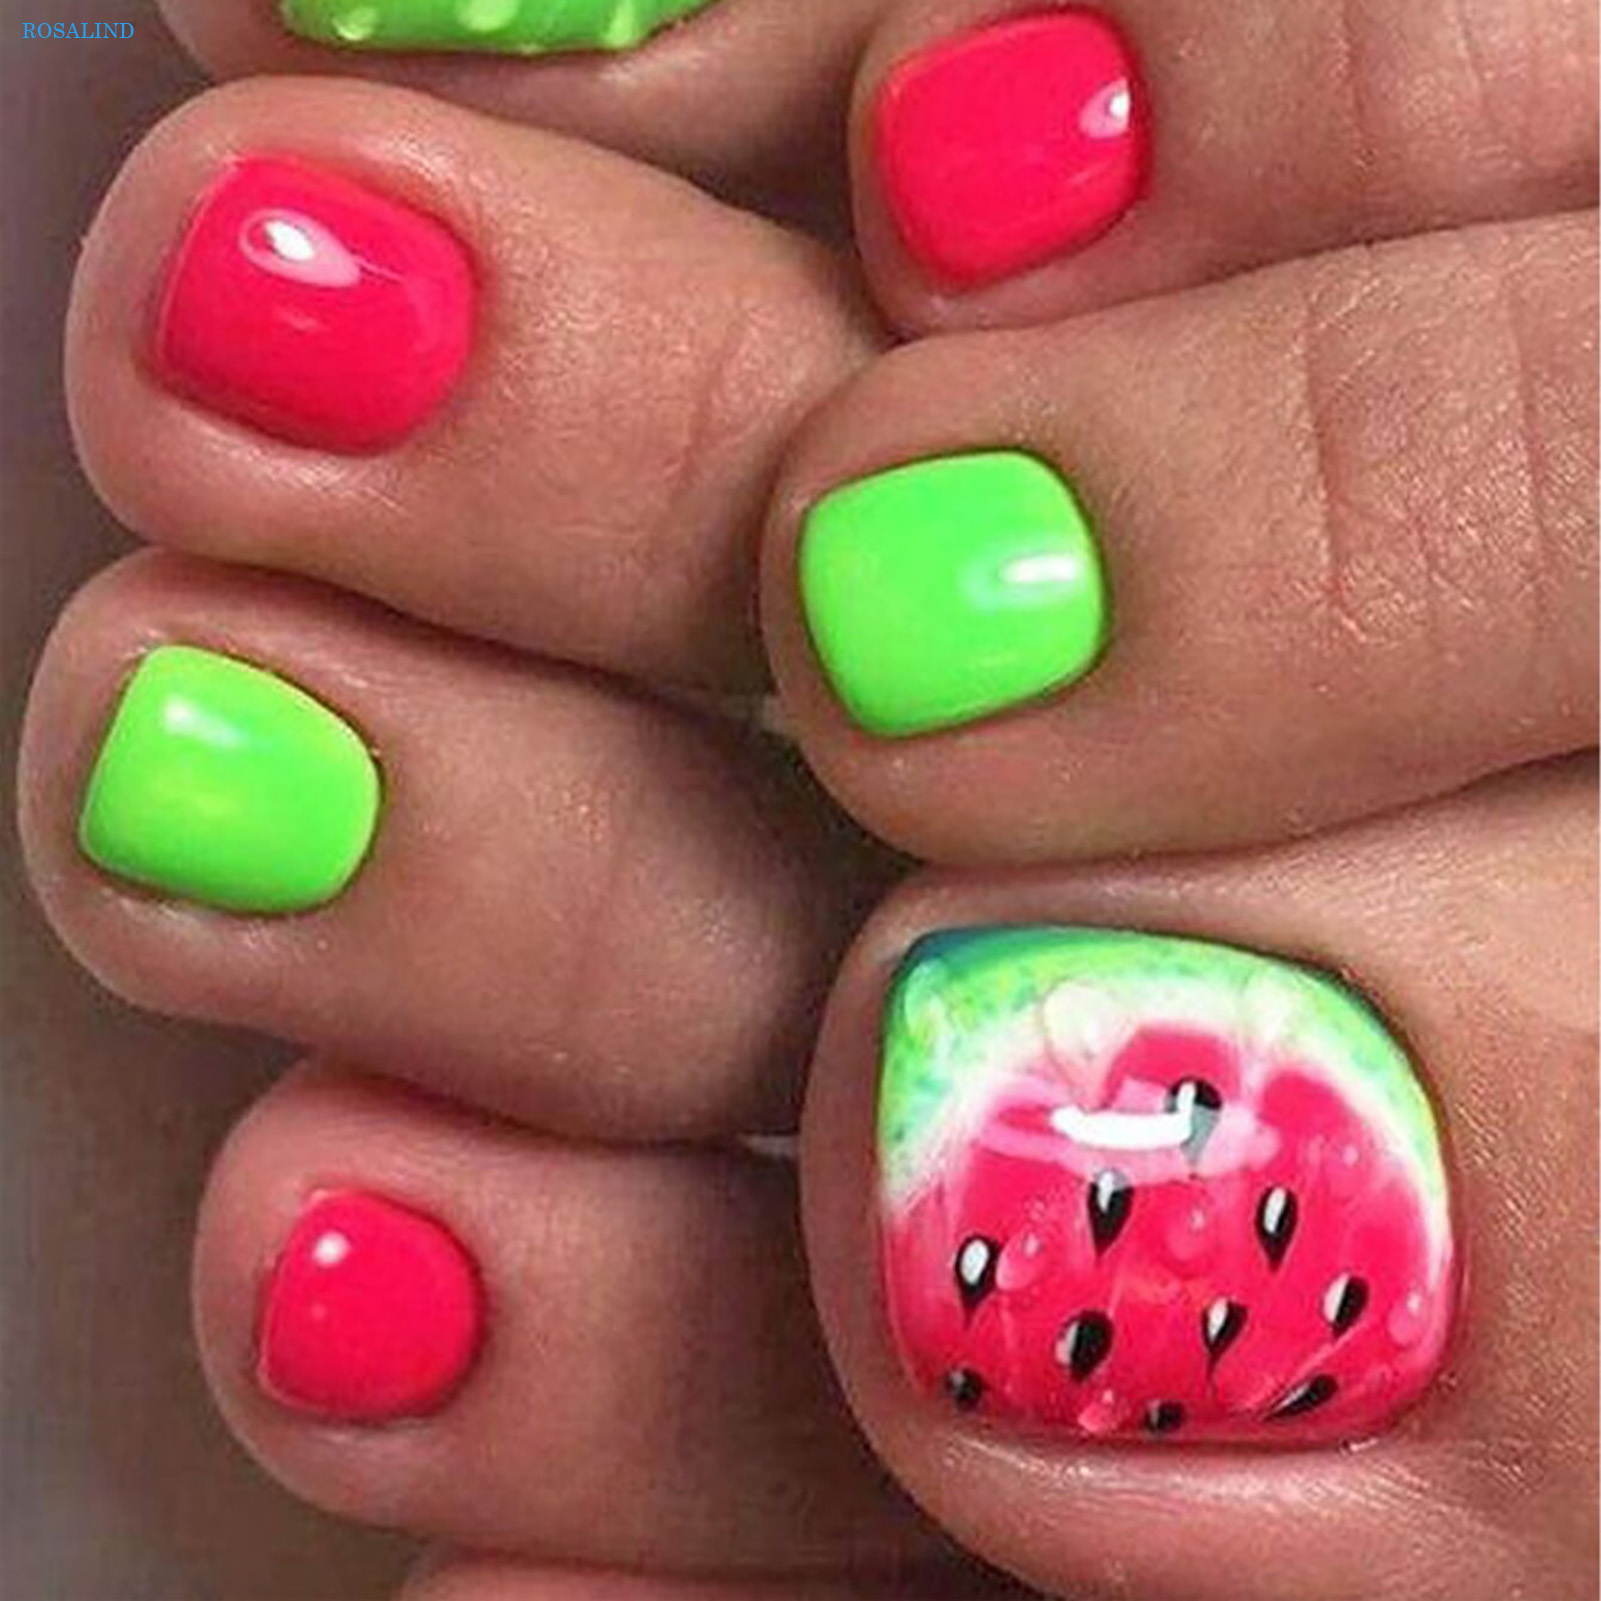 Rosalind Summer Watermelon False Toe Nail Easy Removal False Nail Manicure